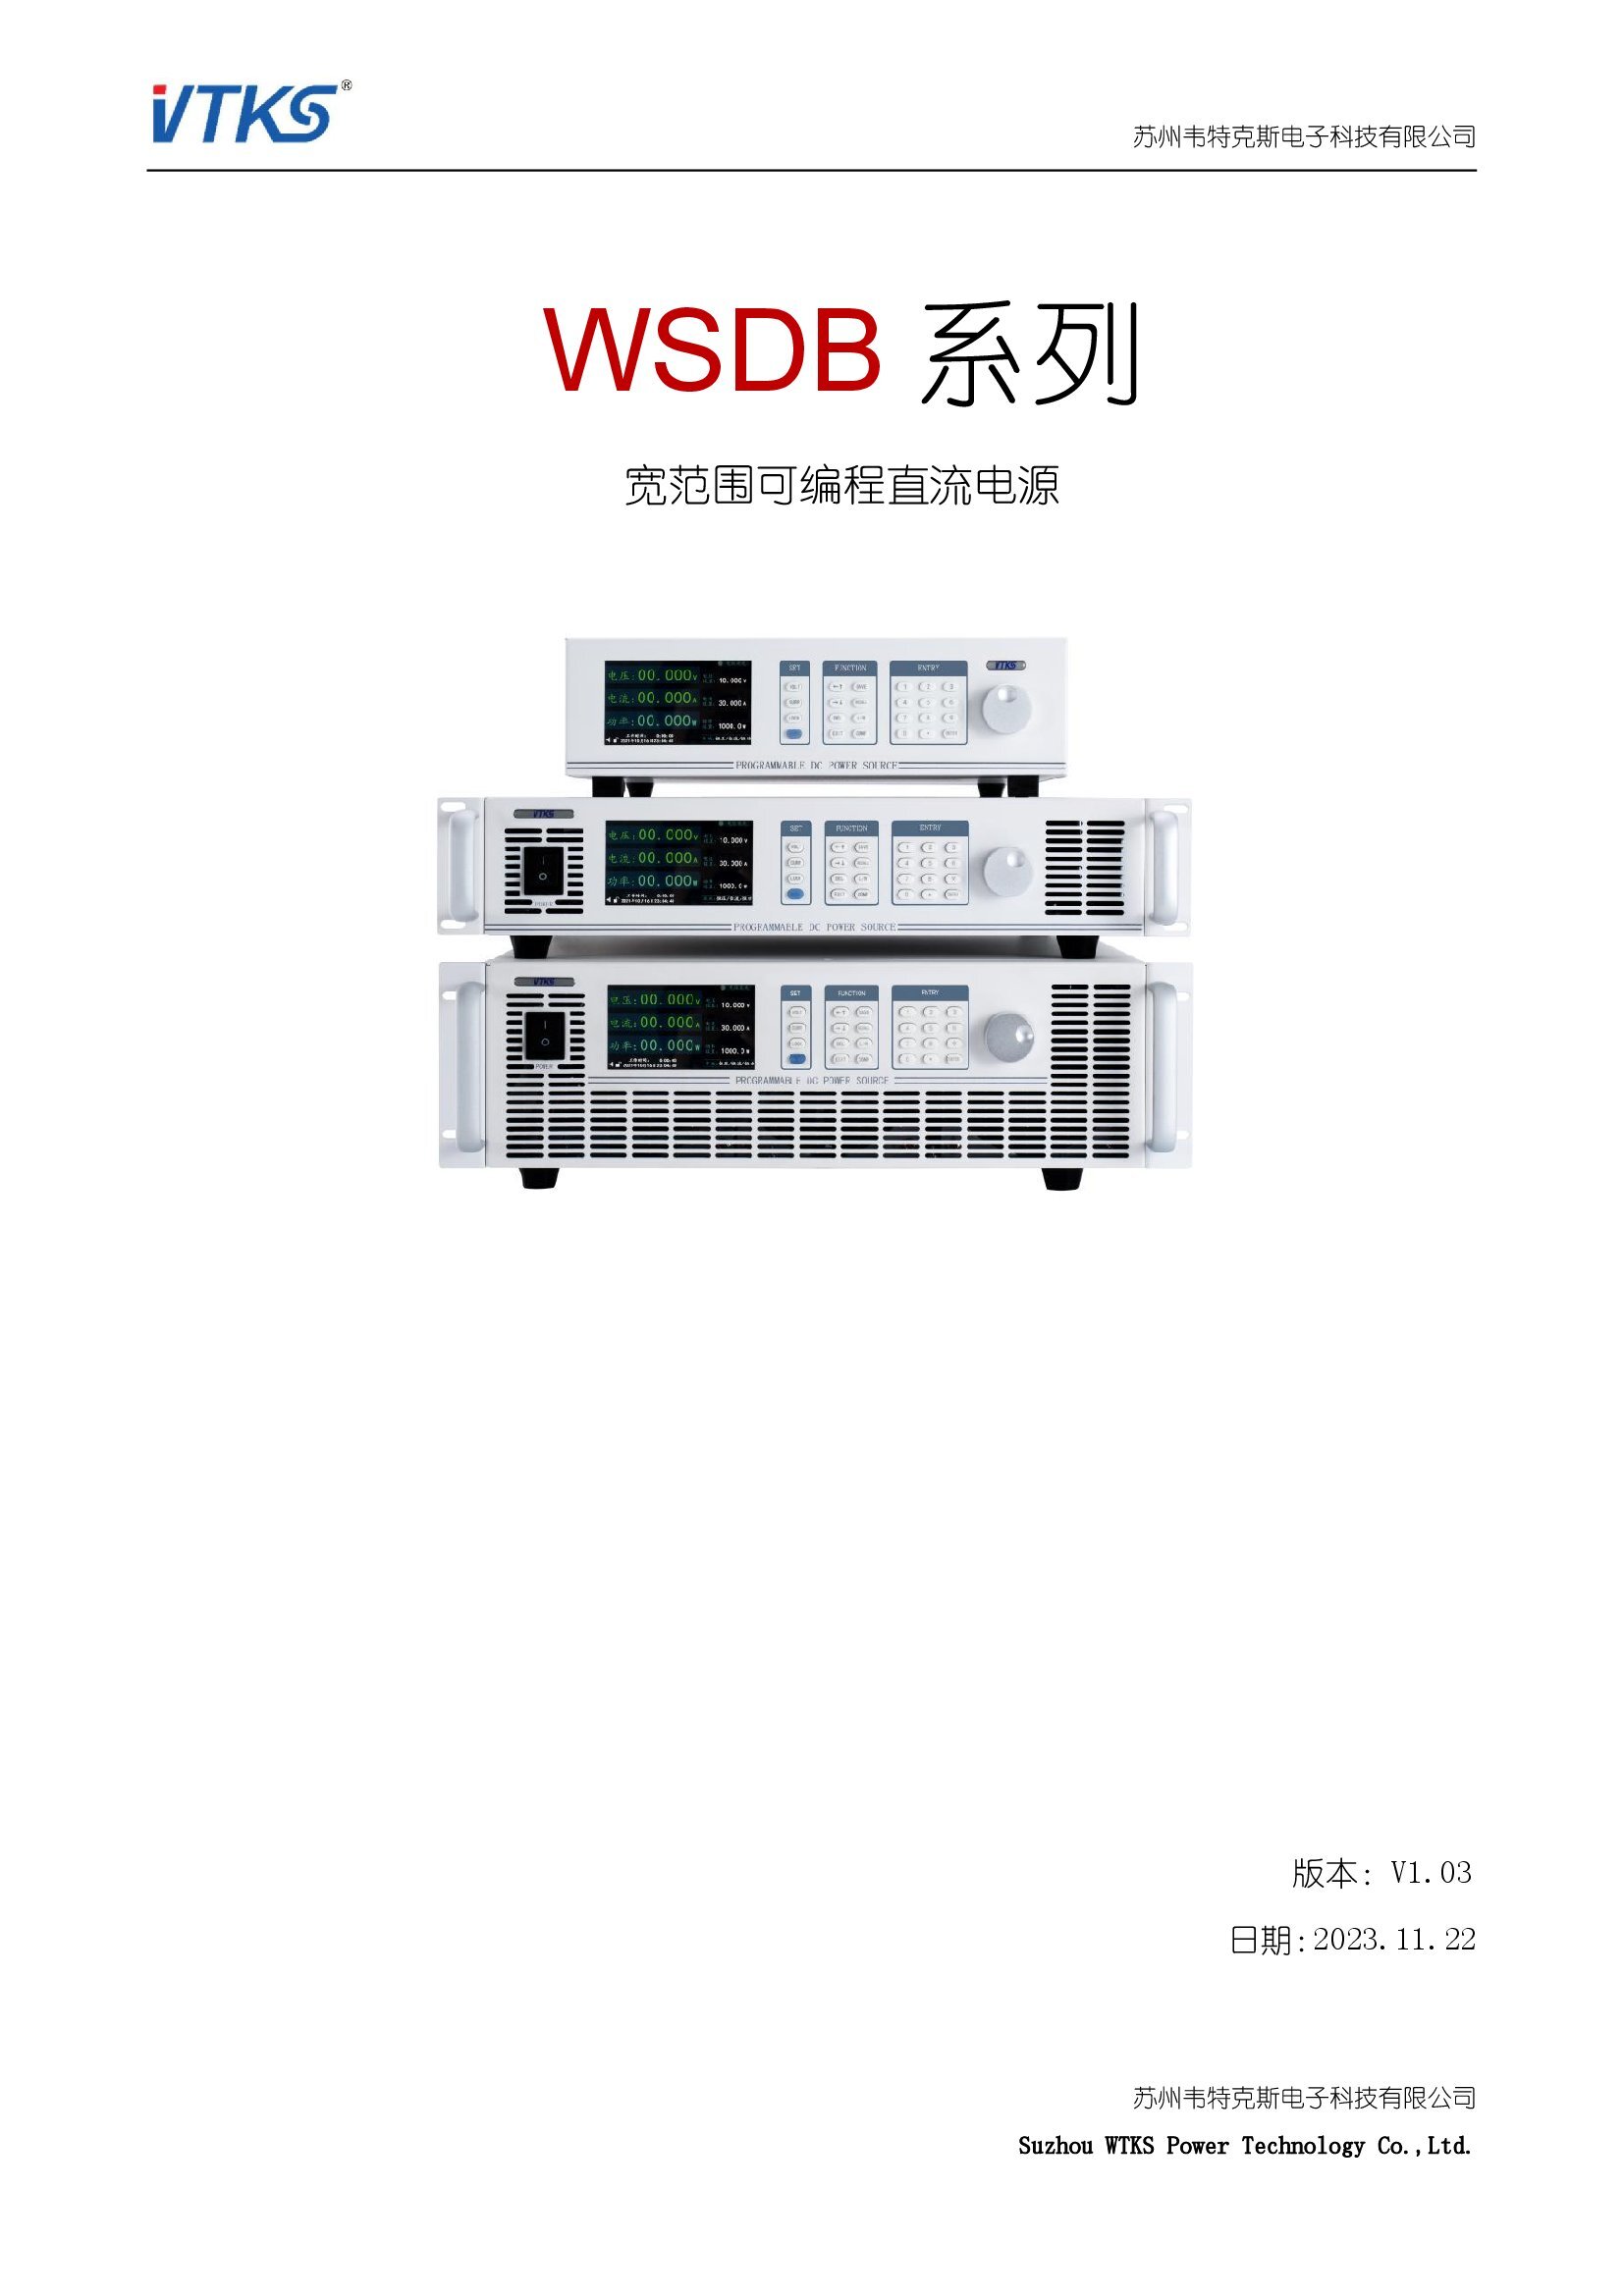 WSDB-150系列_V1.04_00001.jpg